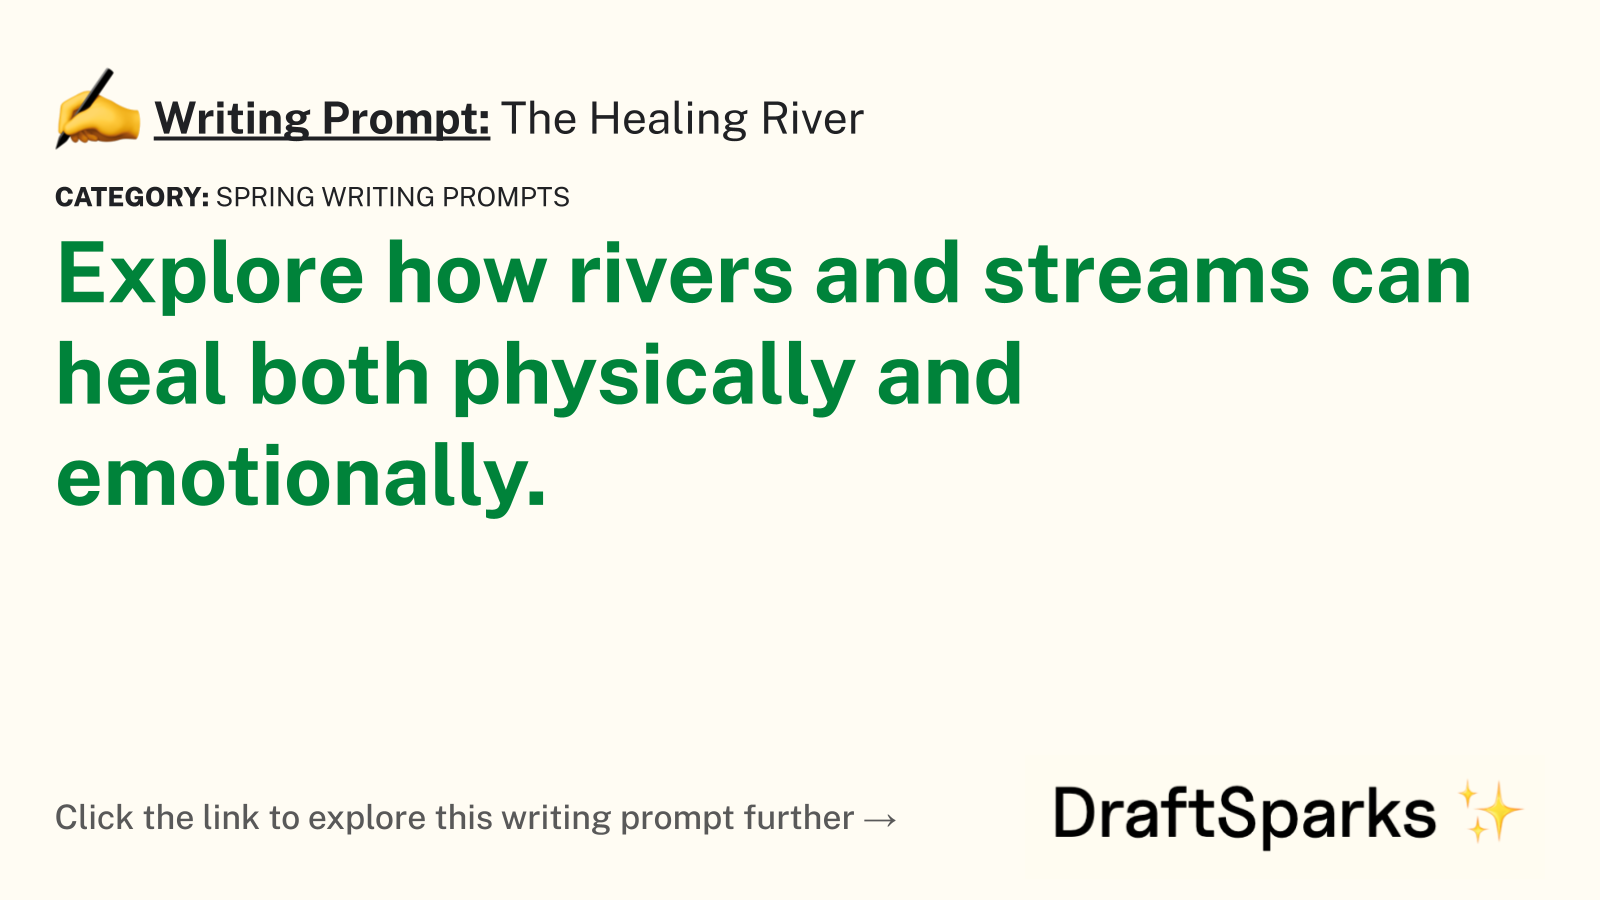 The Healing River